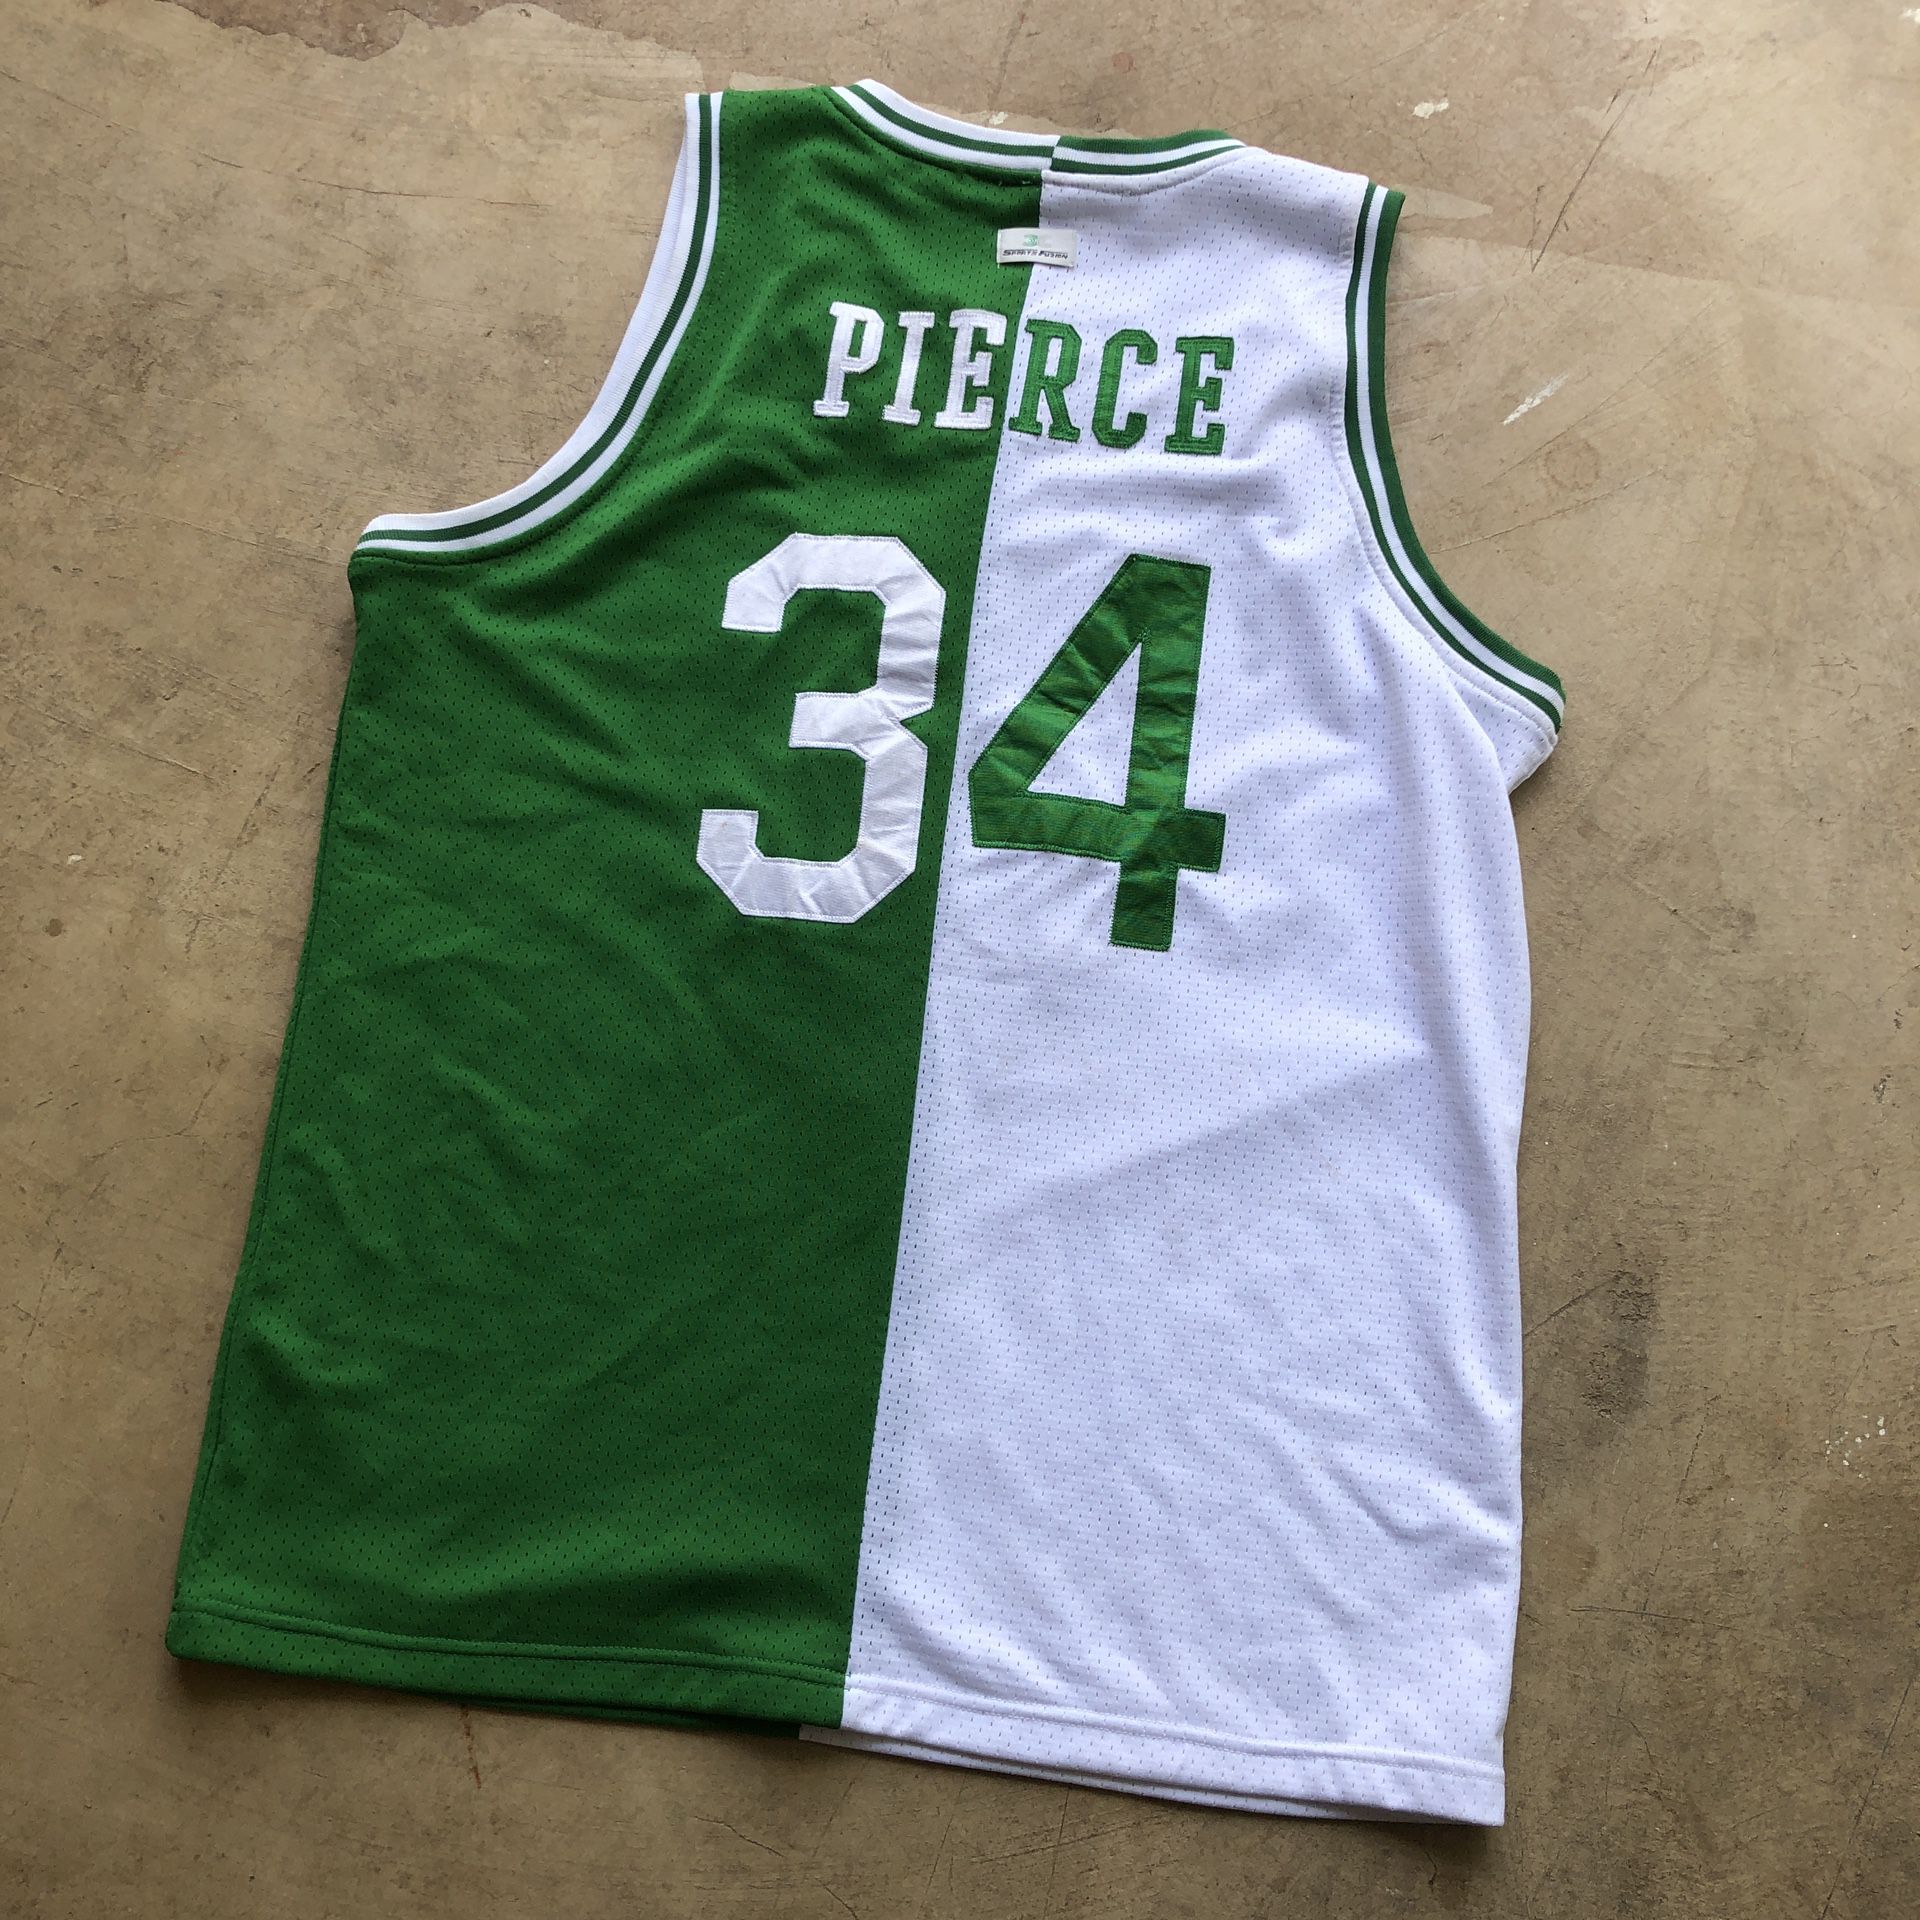 1/1000 Boston Celtics Paul Pierce Jersey shirt